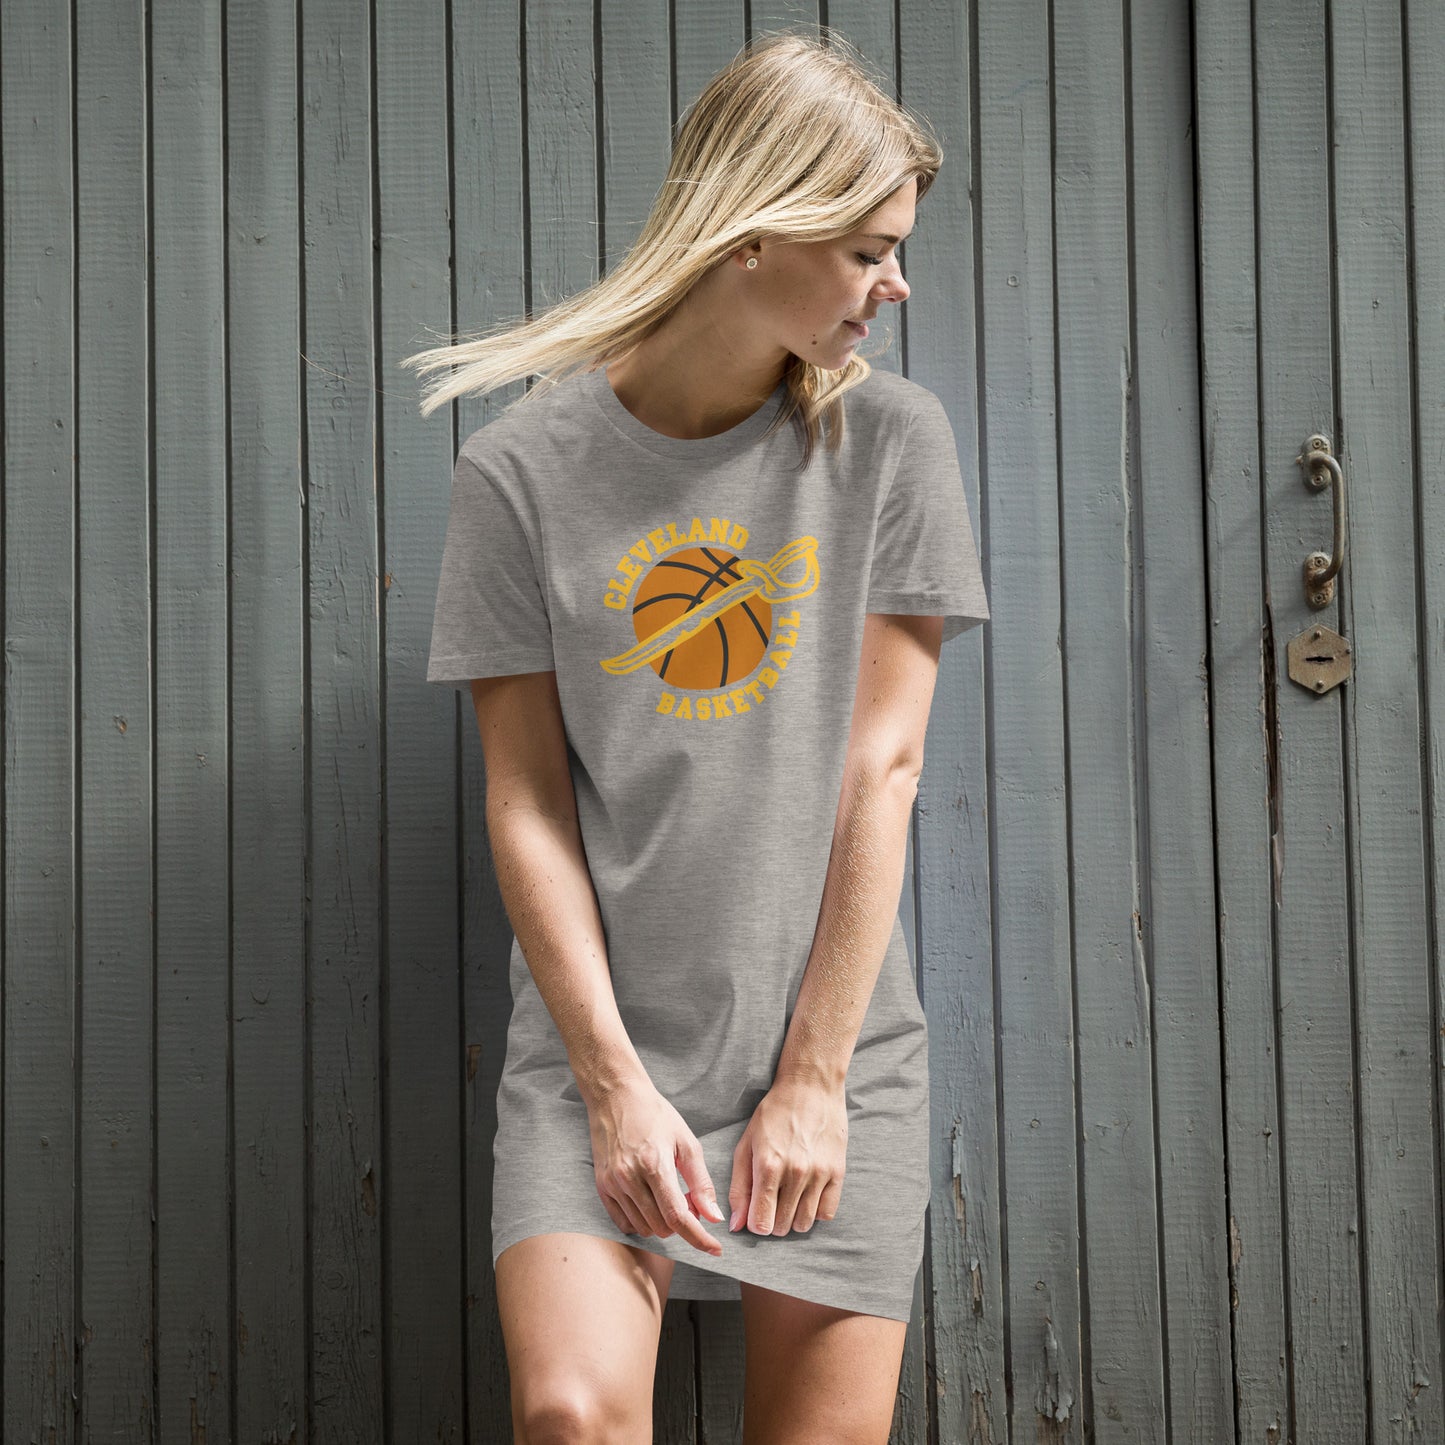 Cleveland Basketball Organic cotton t-shirt dress